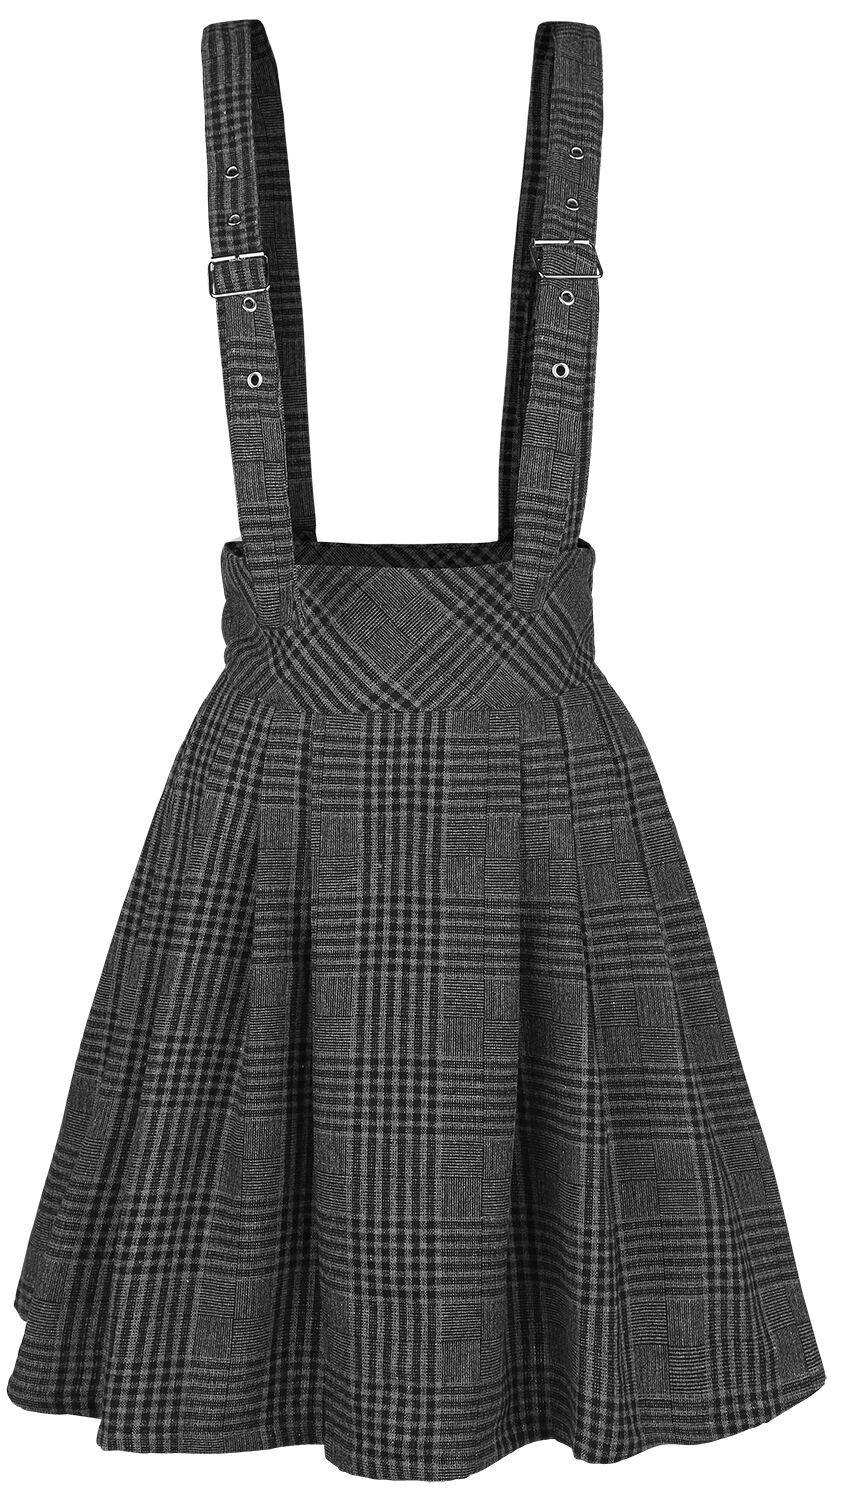 Jawbreaker - Rockabilly Kurzer Rock - Grey Days High Waisted Skirt - S bis XL - für Damen - Größe S - grau